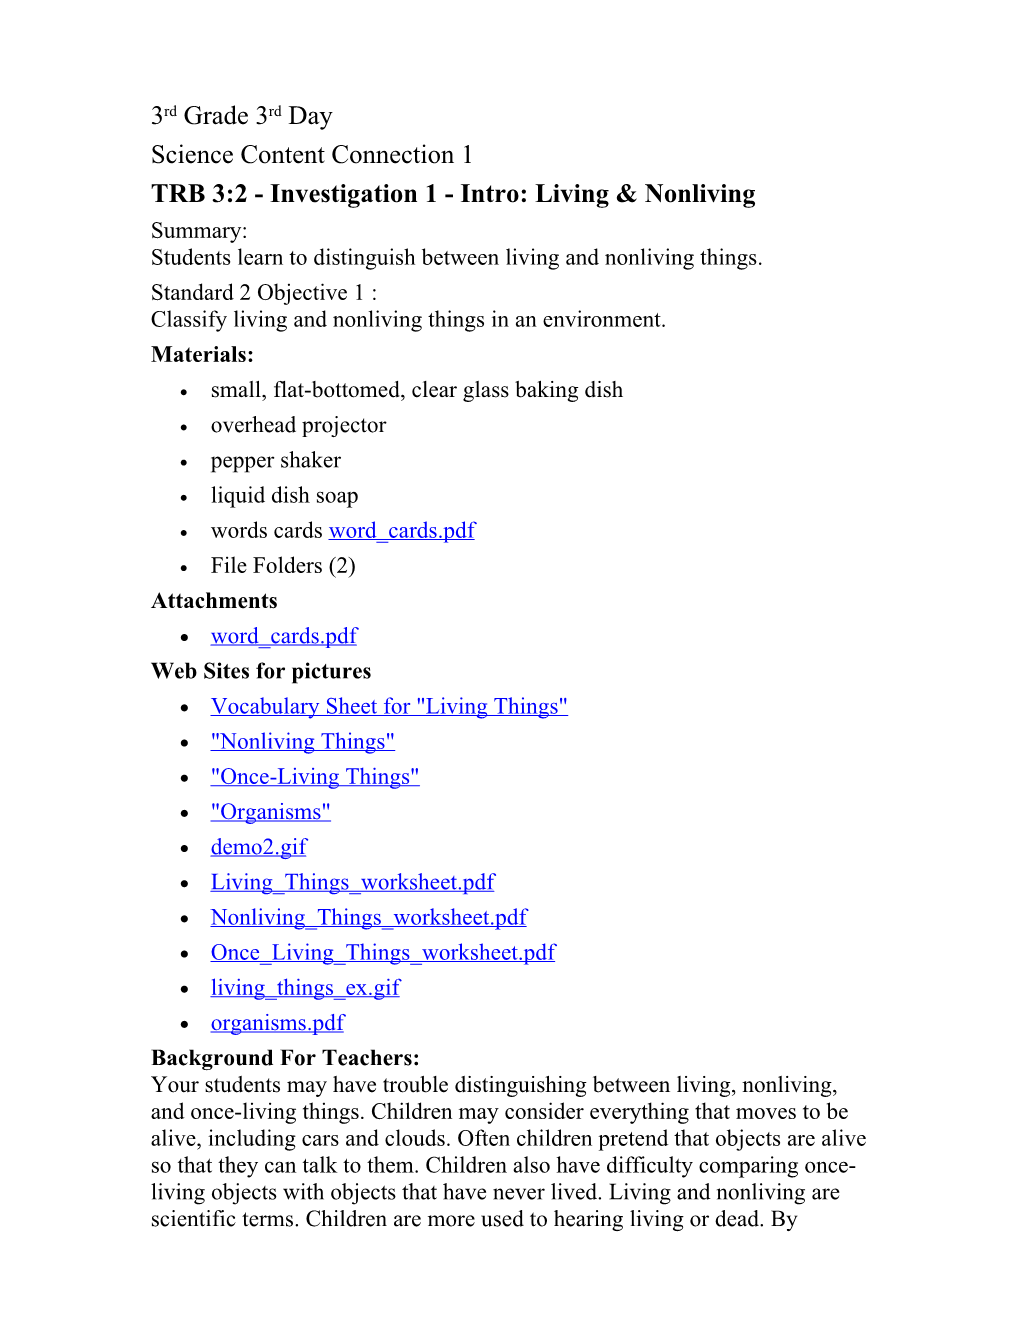 TRB 3:2 - Investigation 1 - Intro: Living & Nonliving